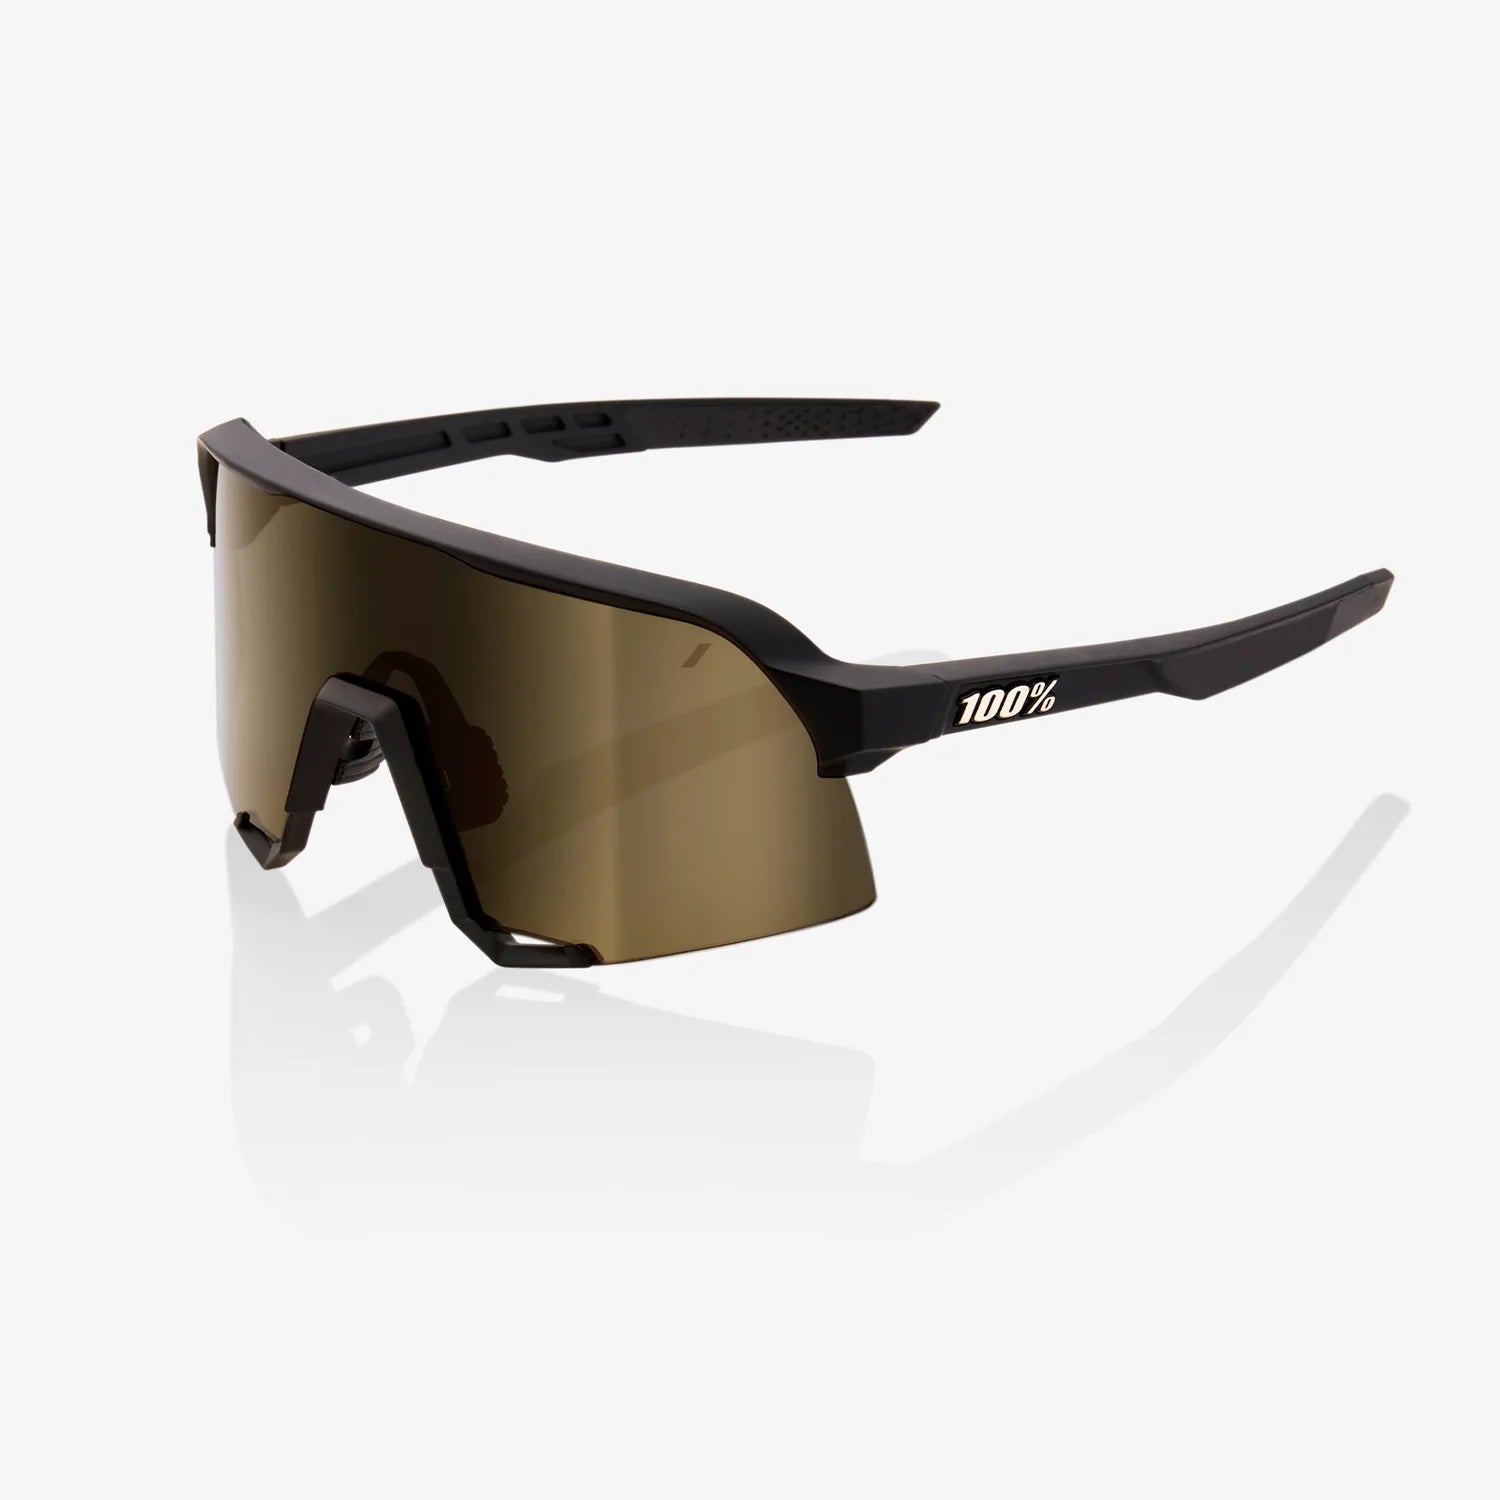 100% S3 Sunglasses, Soft Tact Black frame - Soft Gold Mirror lens